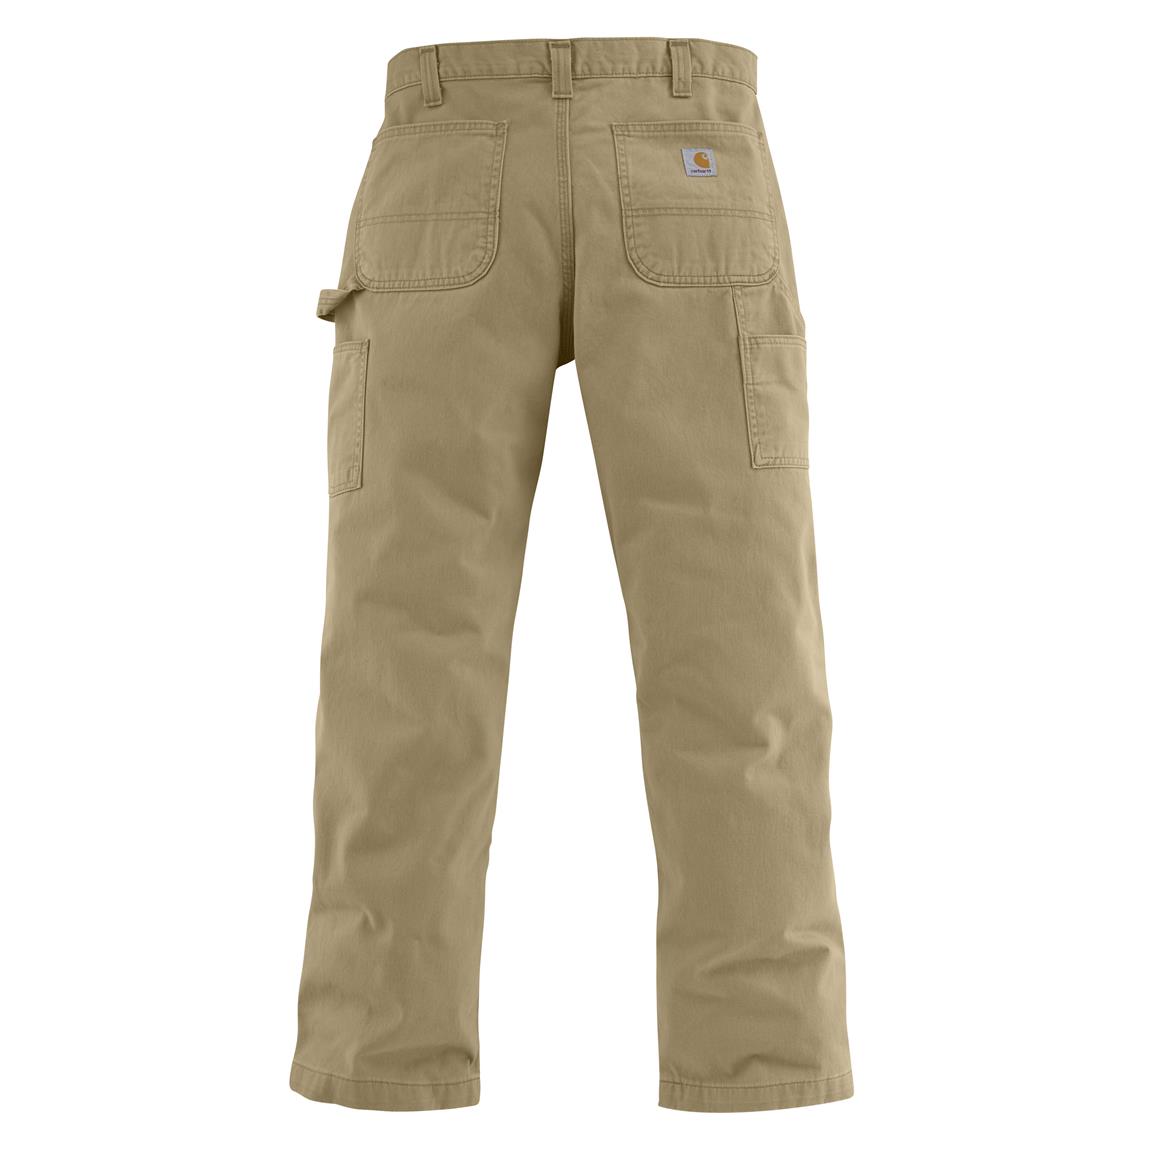 Guide Gear Men's Ripstop Cargo Work Pants - 621473, Jeans & Pants